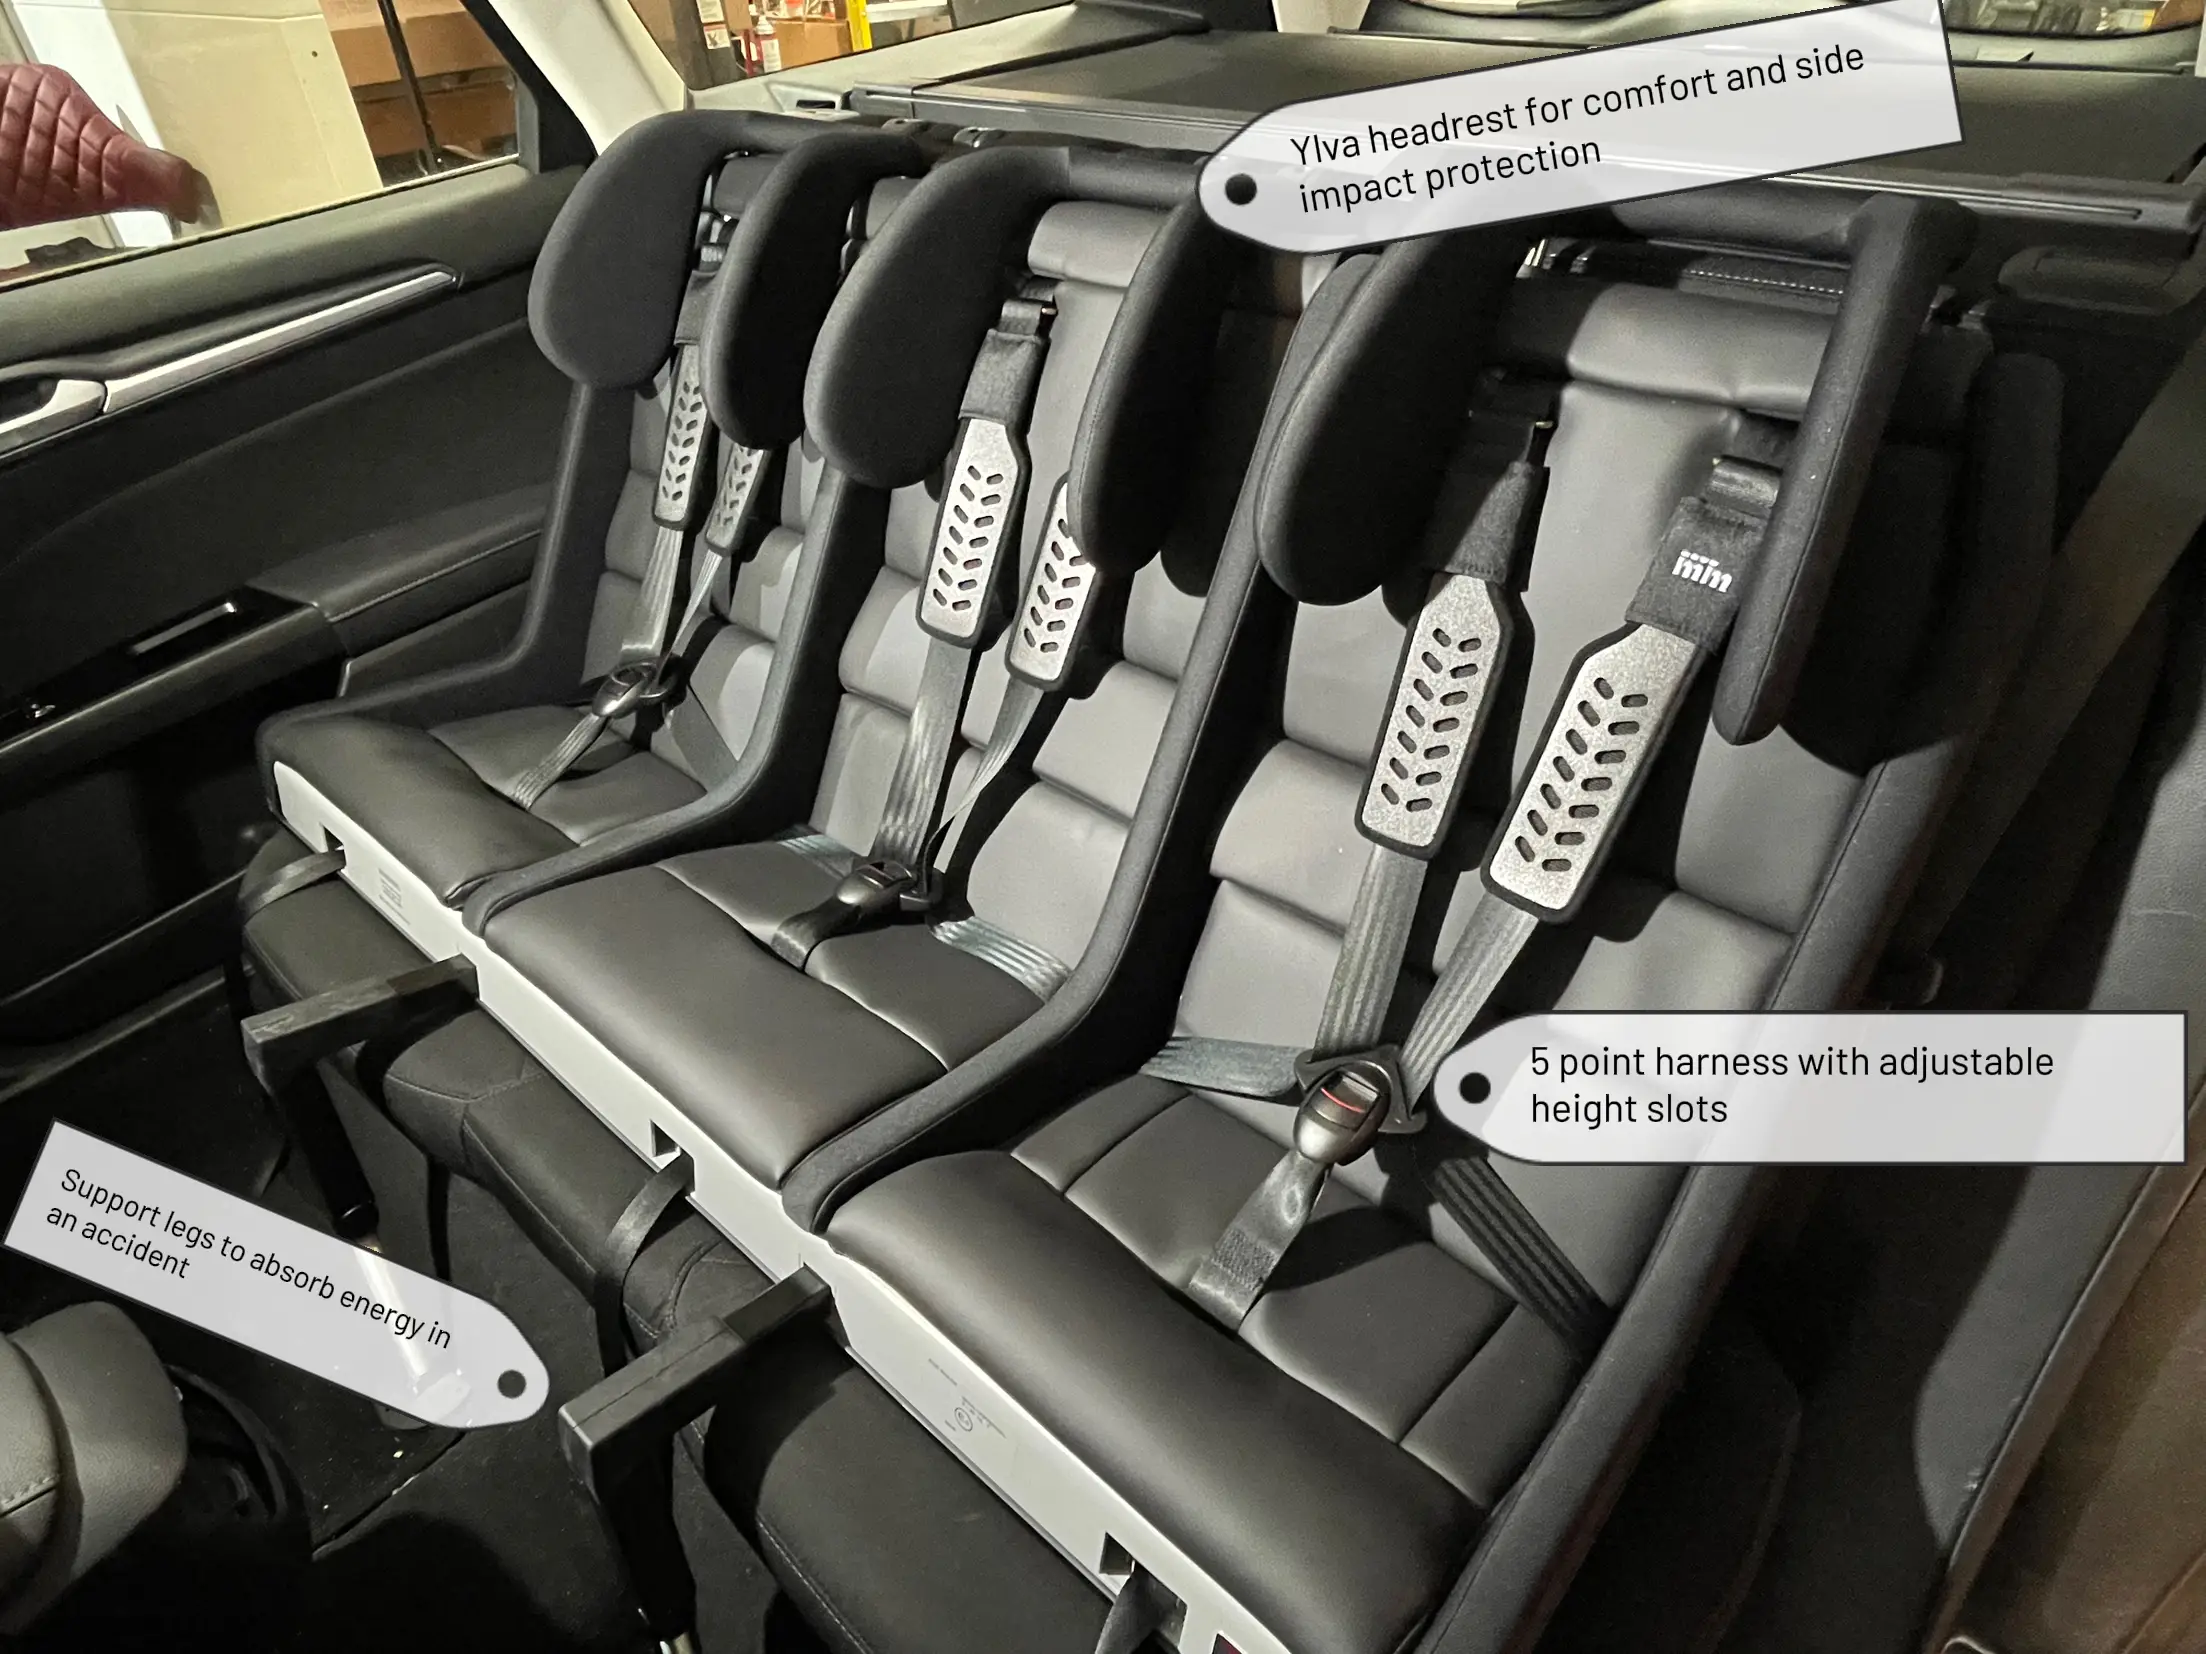 headrest safe for leaving valuables in car - Lemon8 Search